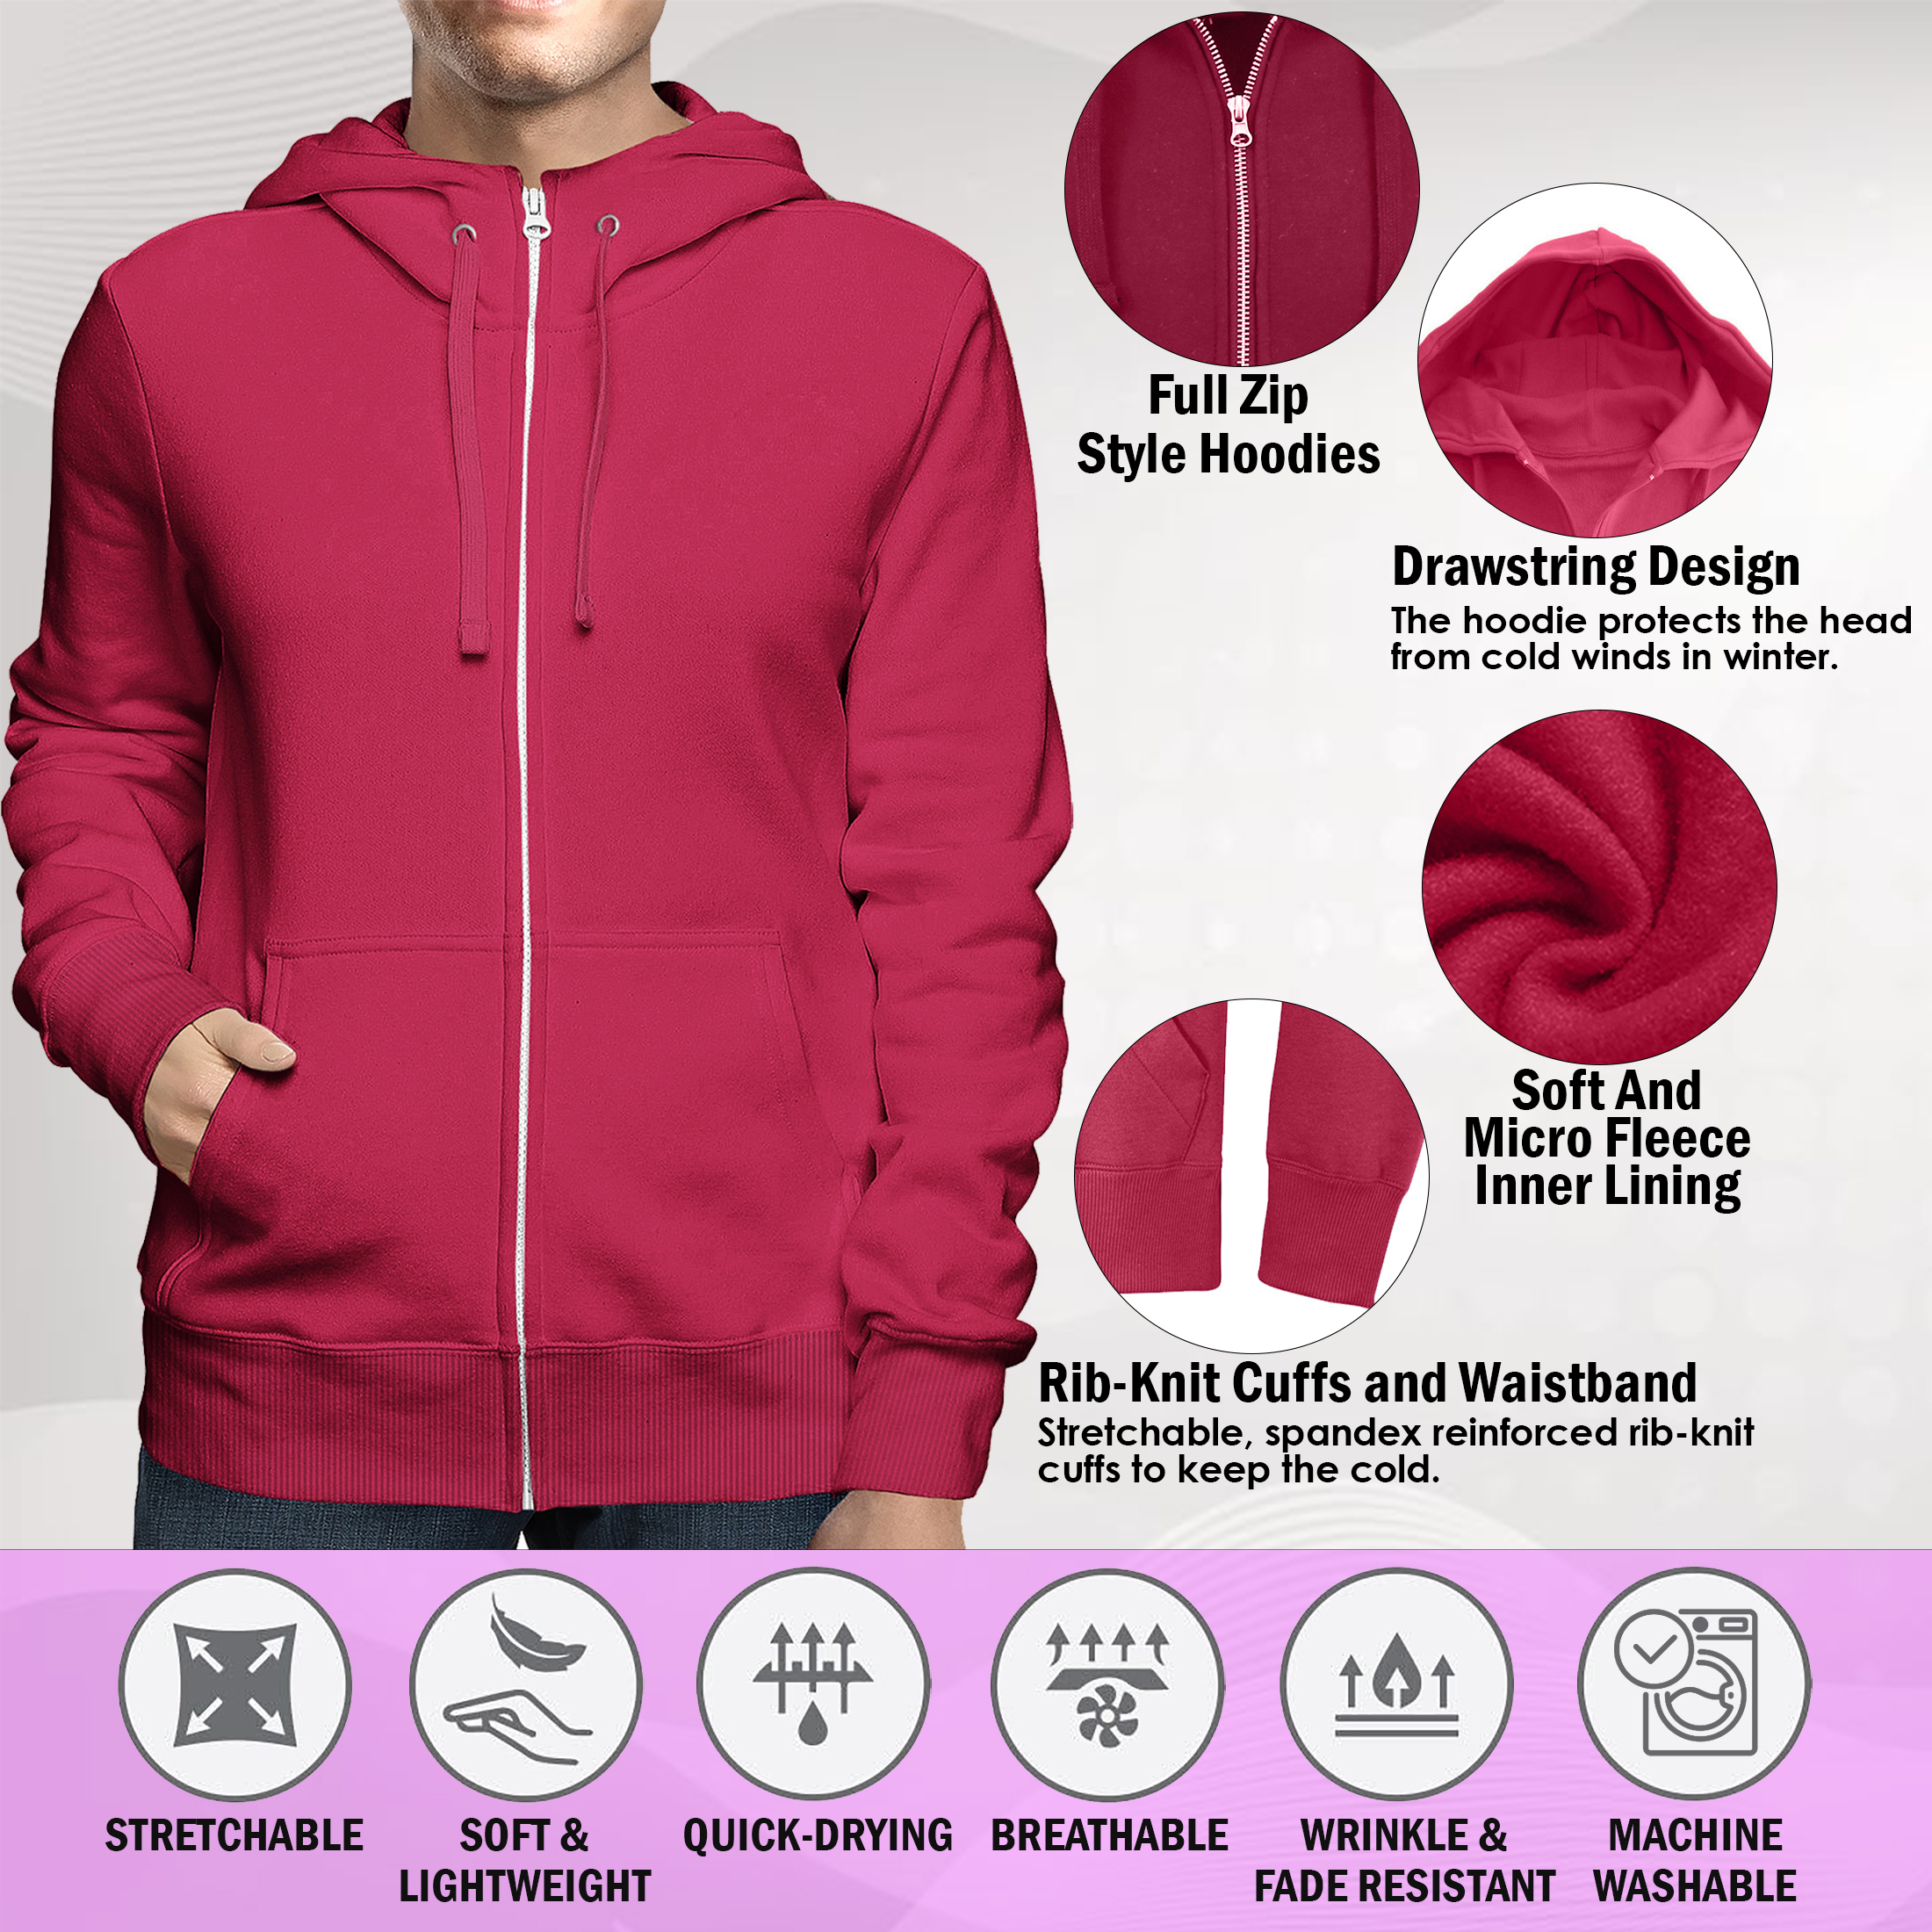 2-Pack: Men's Full Zip Up Fleece-Lined Hoodie Sweatshirt (Big & Tall Size Available) - Burgundy & Olive, Medium